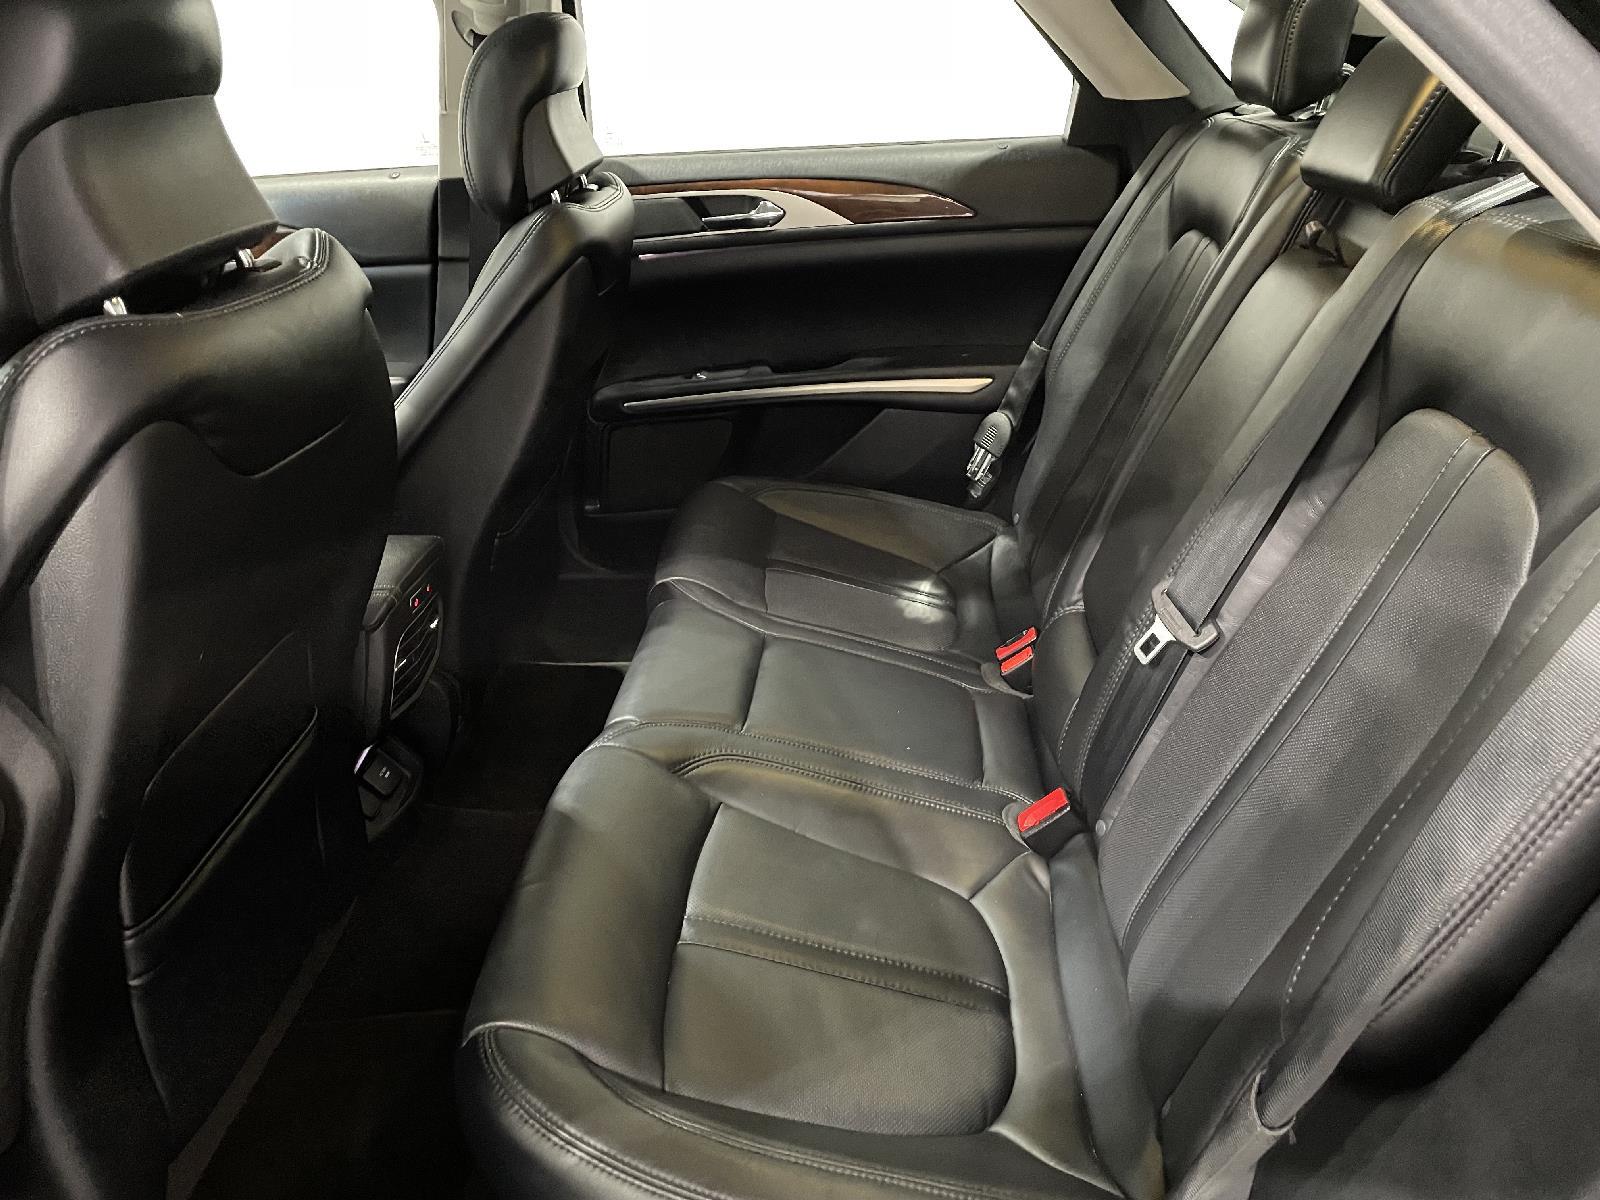 Used 2015 Lincoln MKZ  Sedan for sale in St Joseph MO